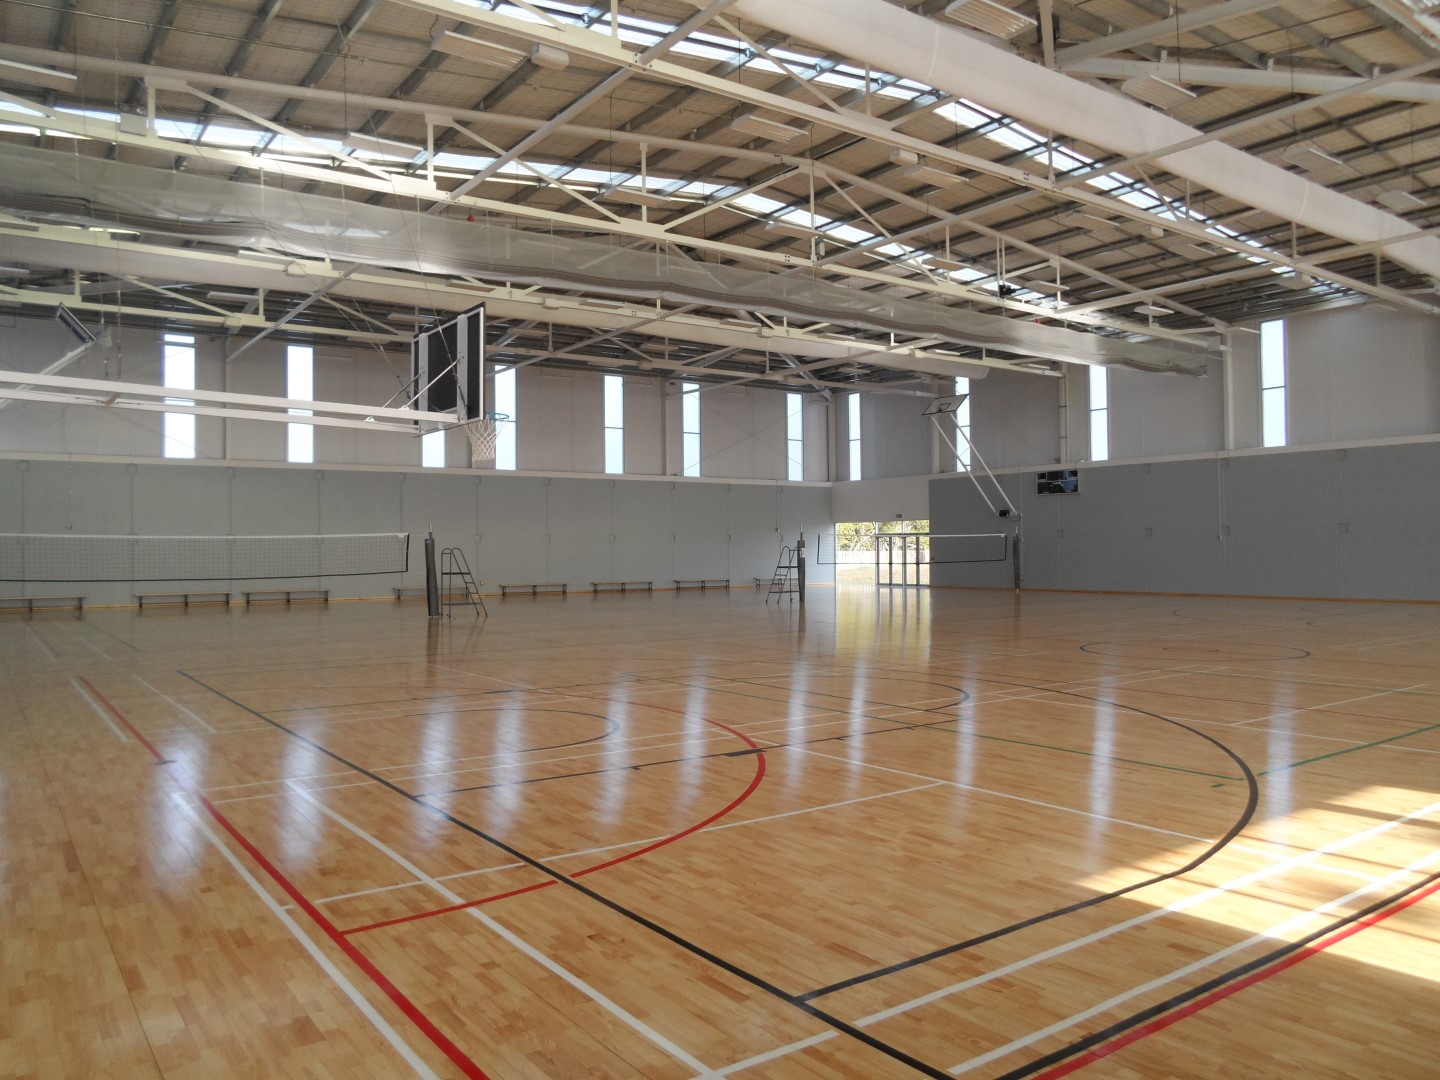 South Waikato Sports & Events Centre gym court